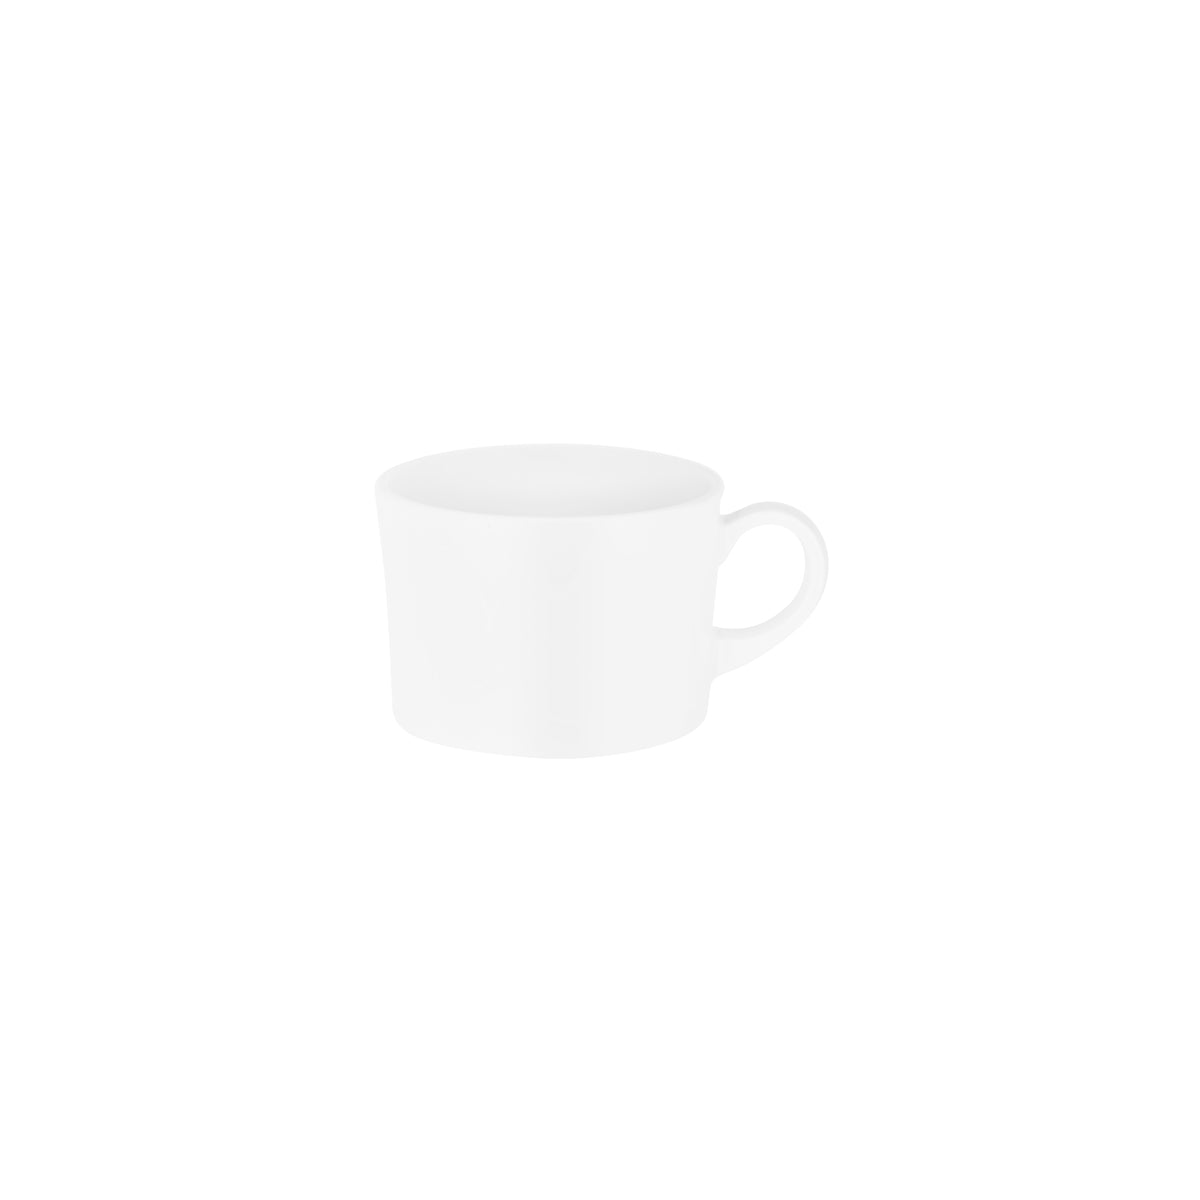 49331 Superware White Tea / Coffee Cup 240ml Tomkin Australia Hospitality Supplies